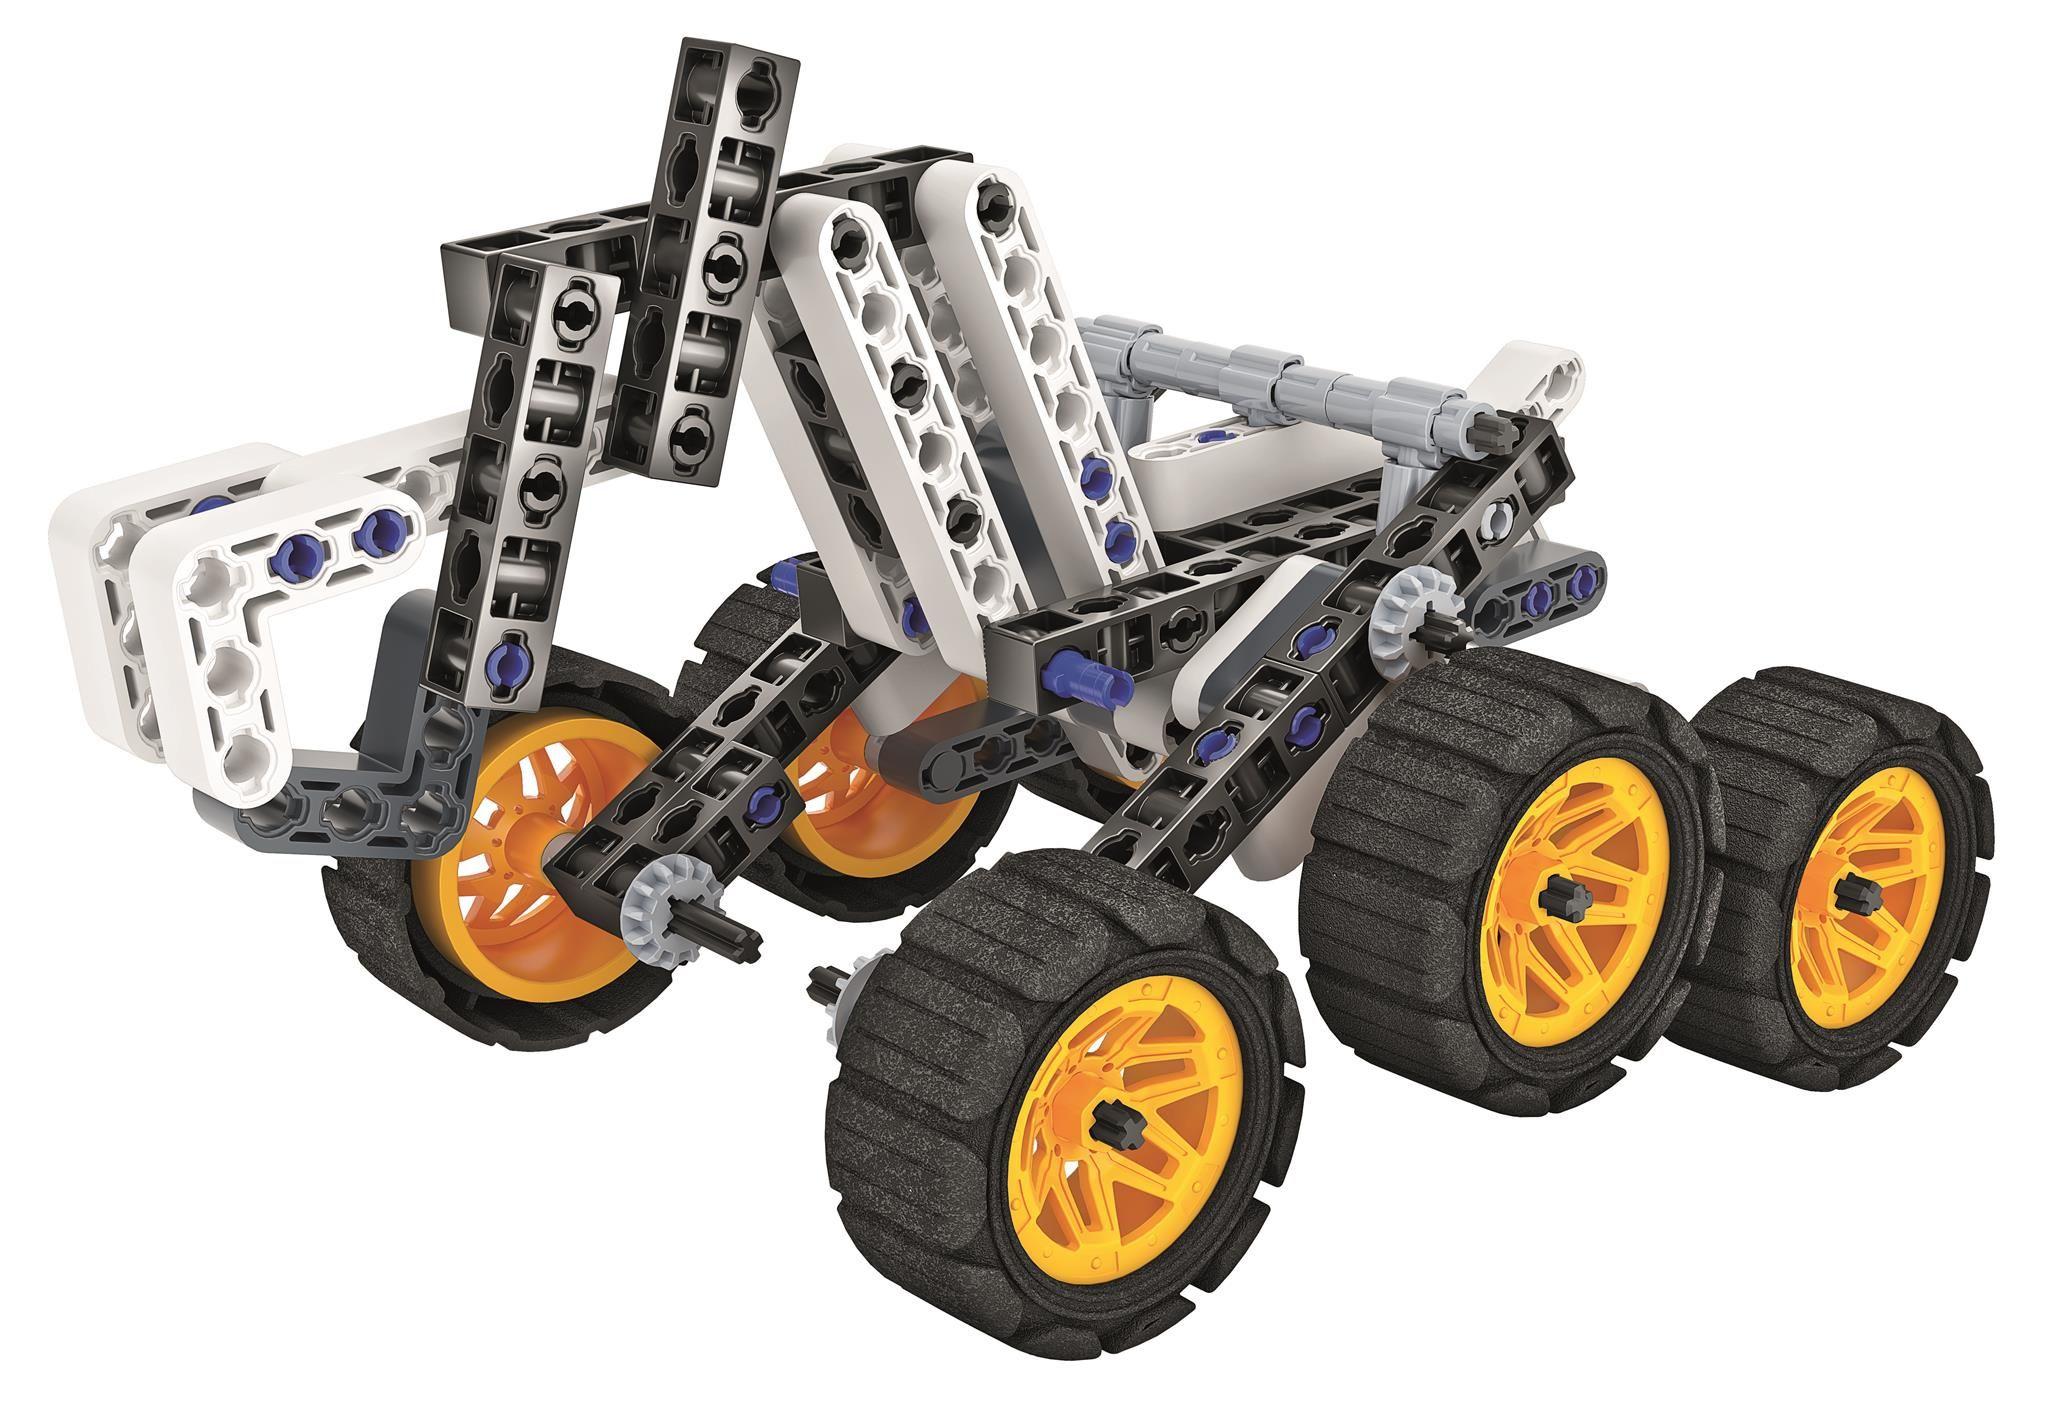 Clementoni: Mechanics Laboratory - Mars rover